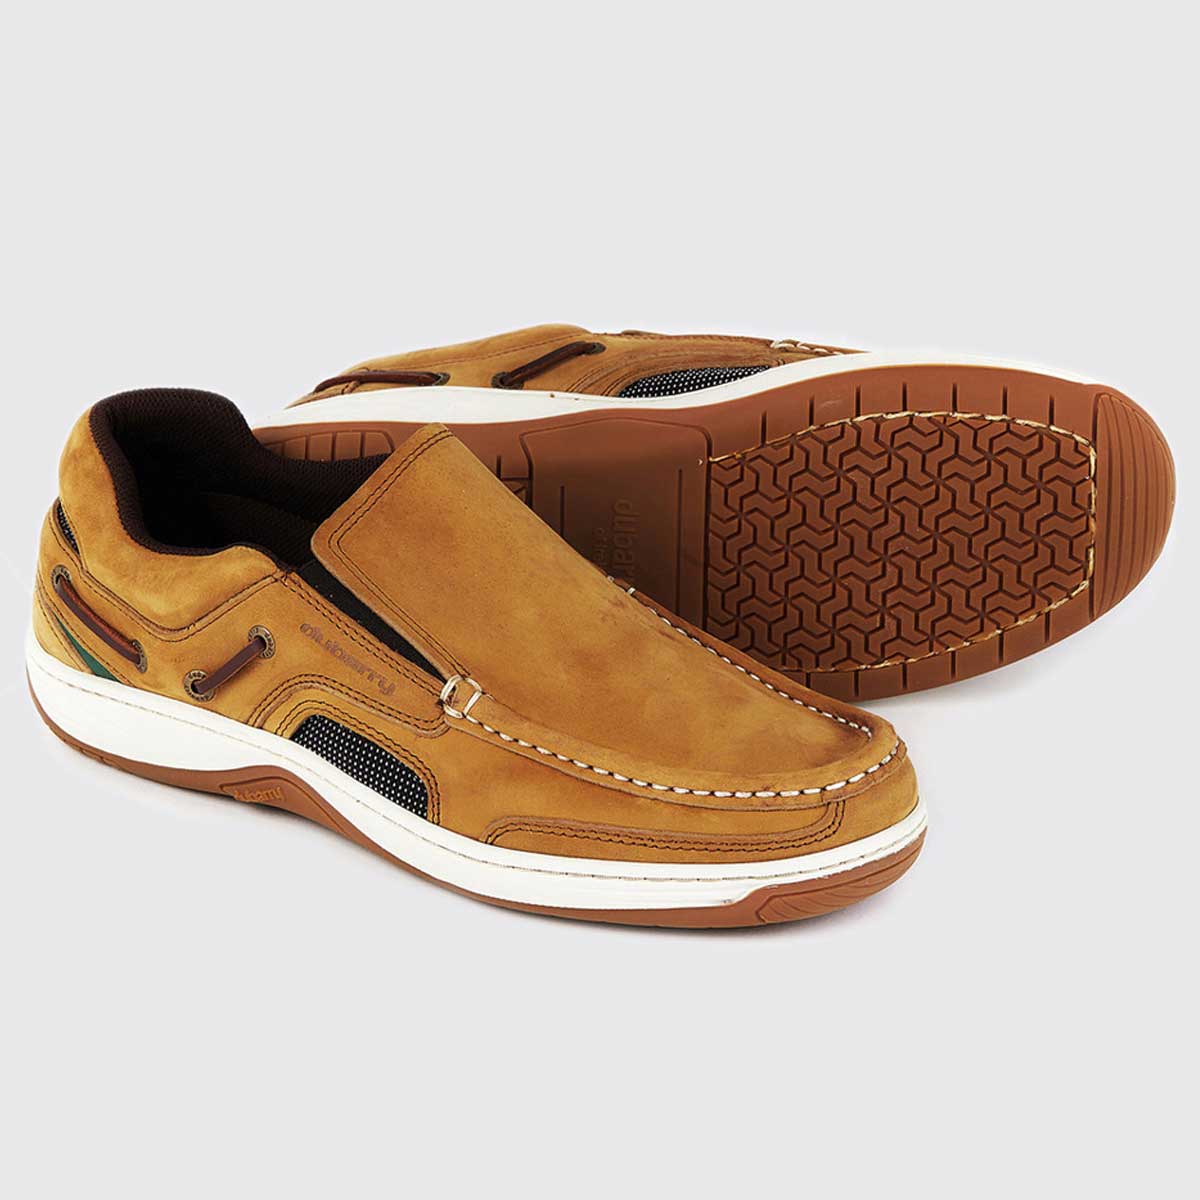 DUBARRY Men's Yacht Deck Shoes - Loafer - Brown Nubuck